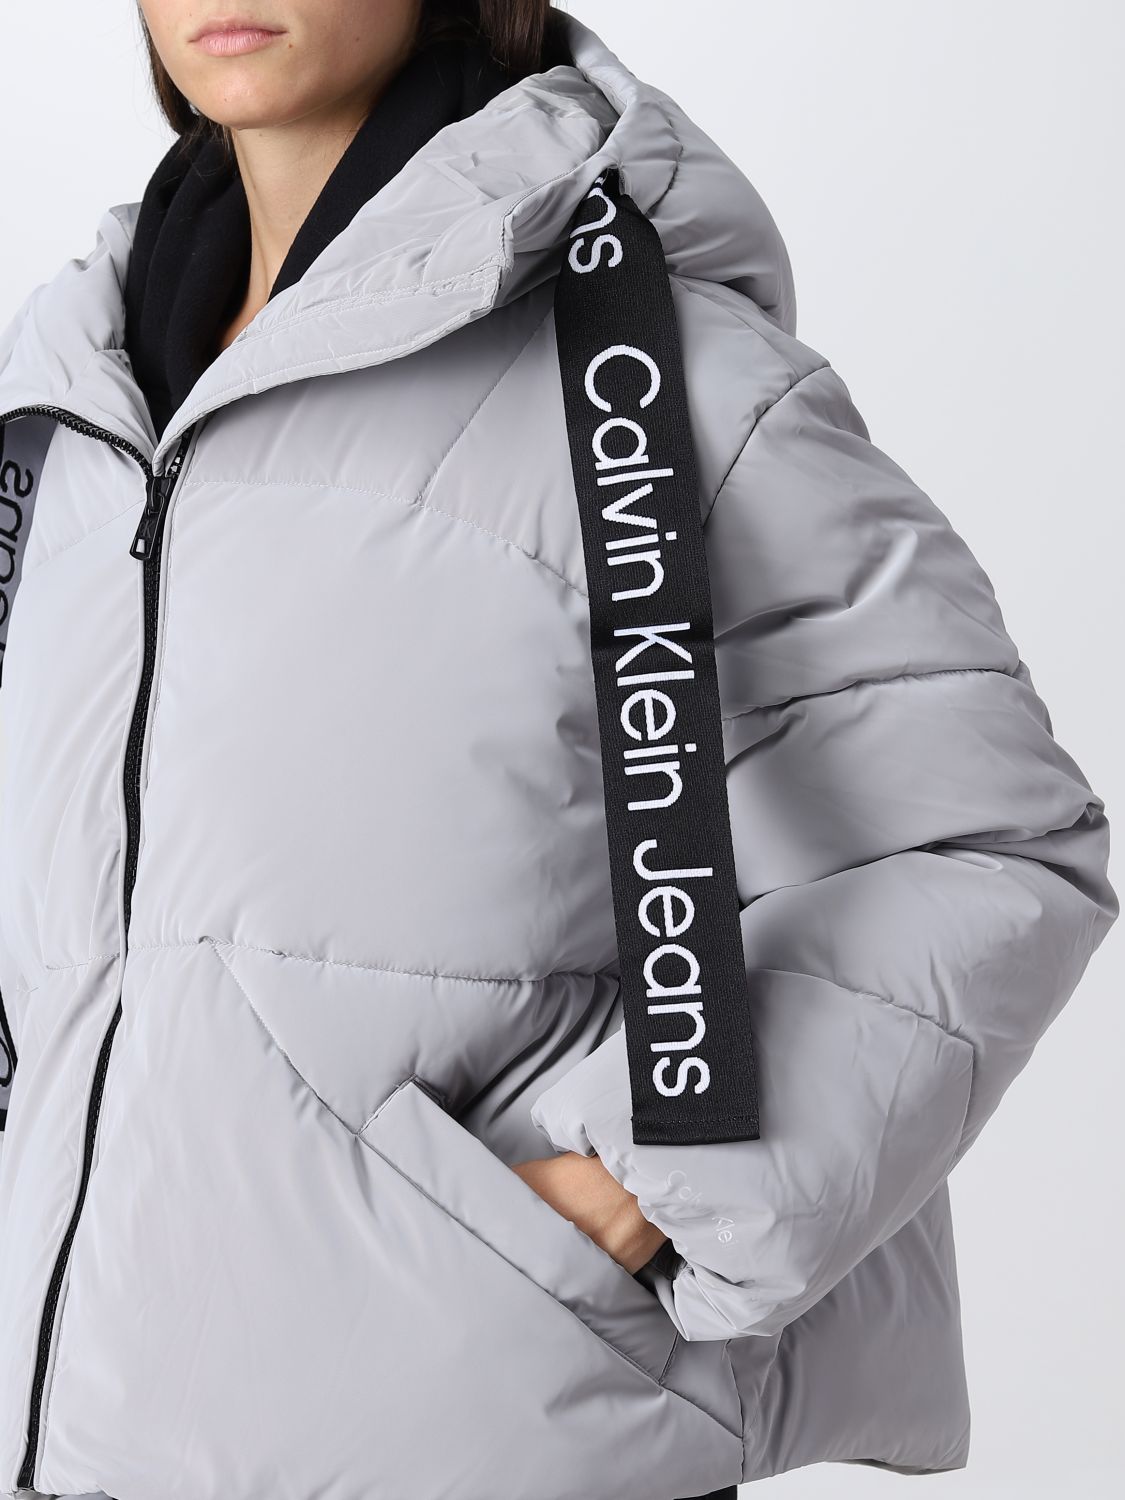 CALVIN KLEIN JEANS: down jacket with logo - Grey | Calvin Klein Jeans jacket  J20J220017 online at